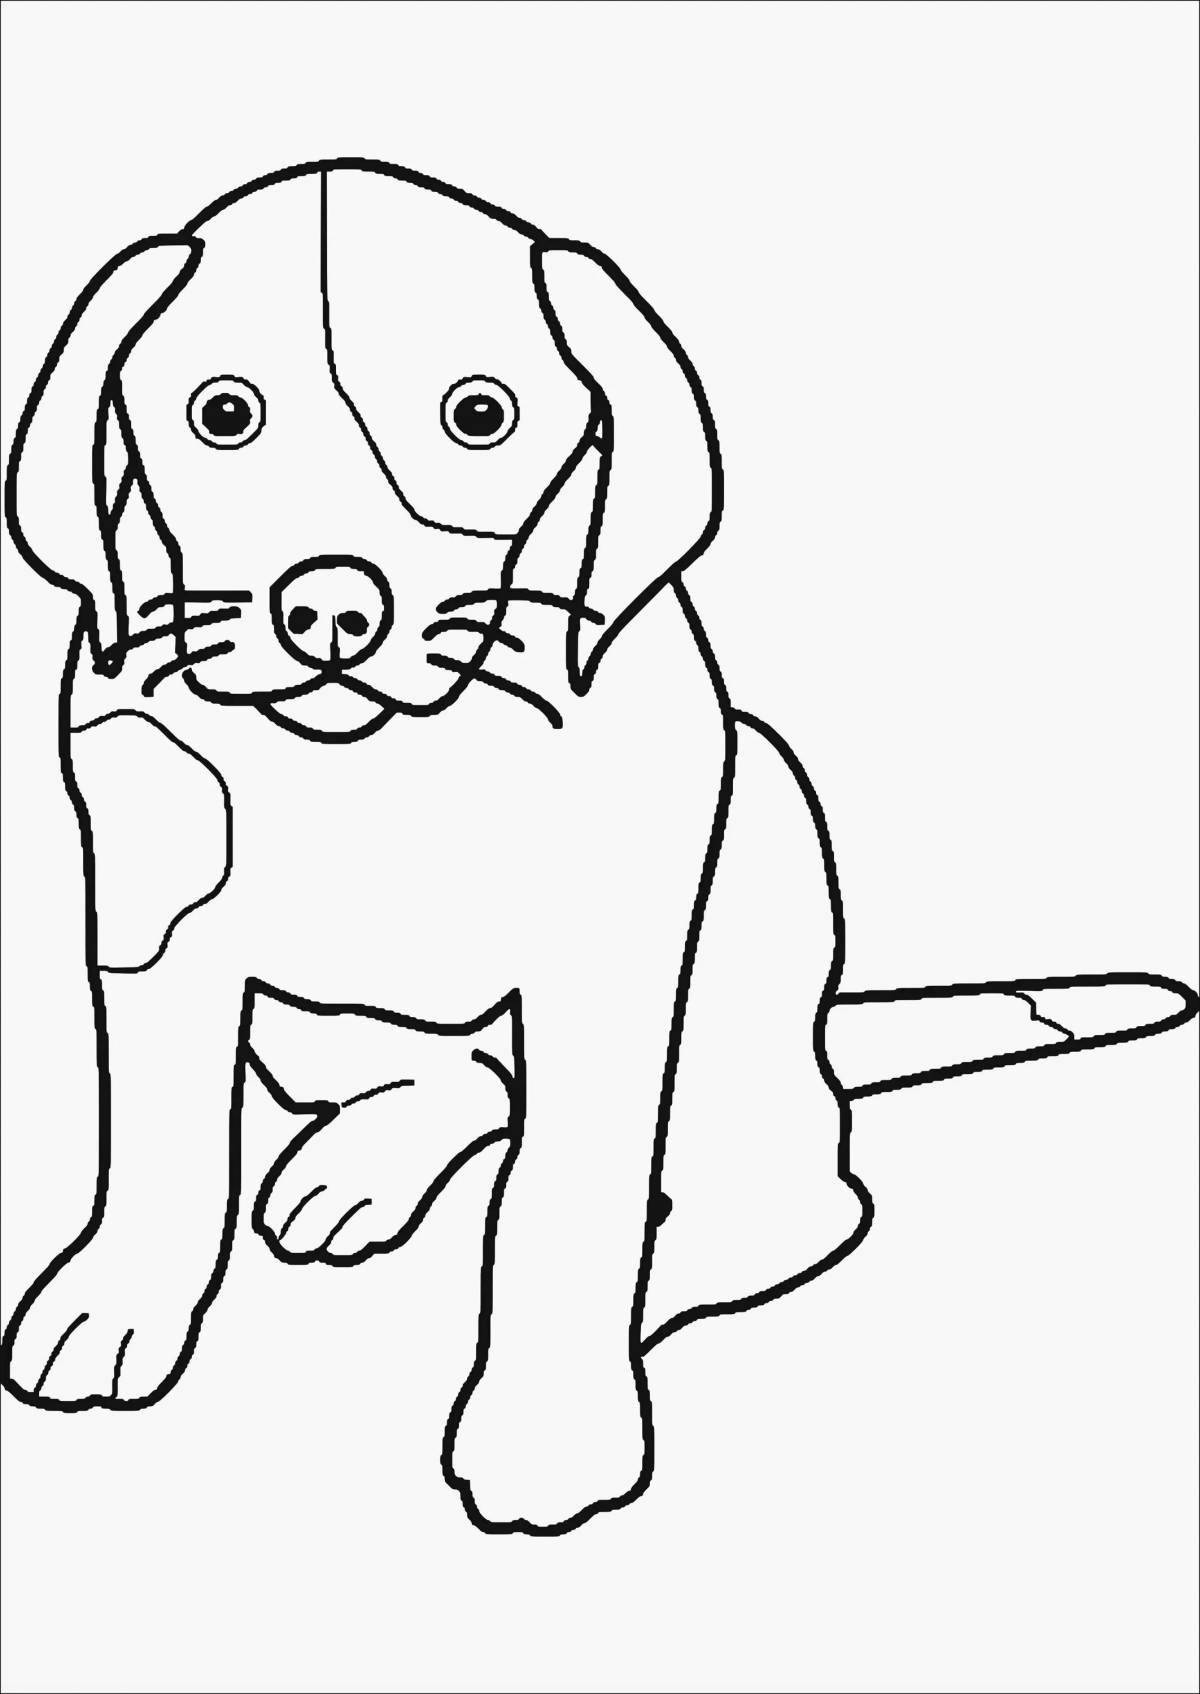 Joyful dog coloring book for kids